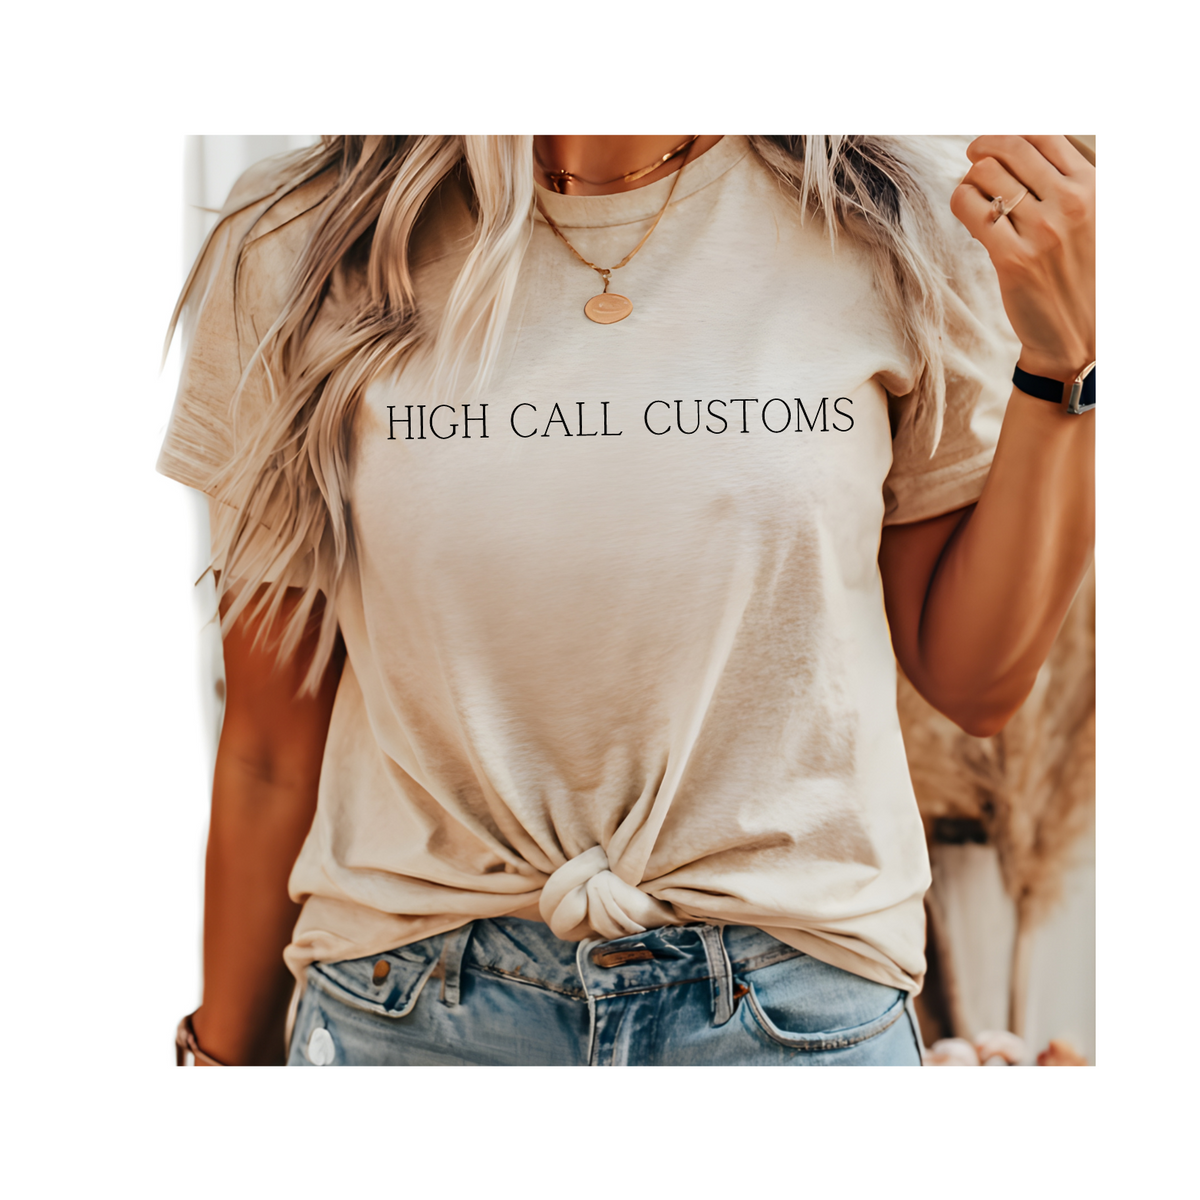 High Call Customs tee